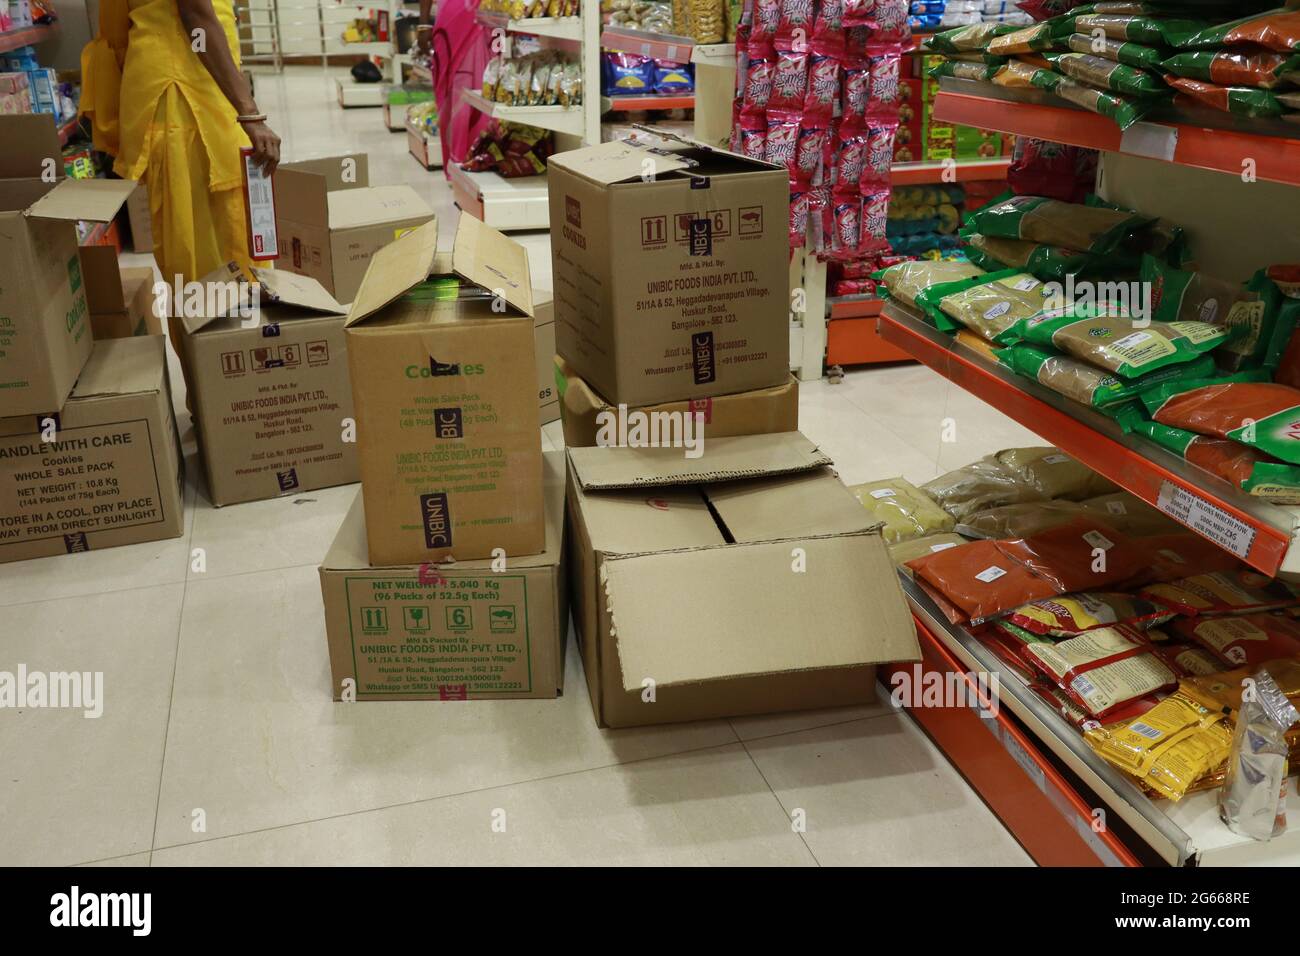 February 25, 2021. Kishanganj Bihar, Crates dumped on the floor in a supermarket shop at Kishanganj Bihar. High quality photo Stock Photo